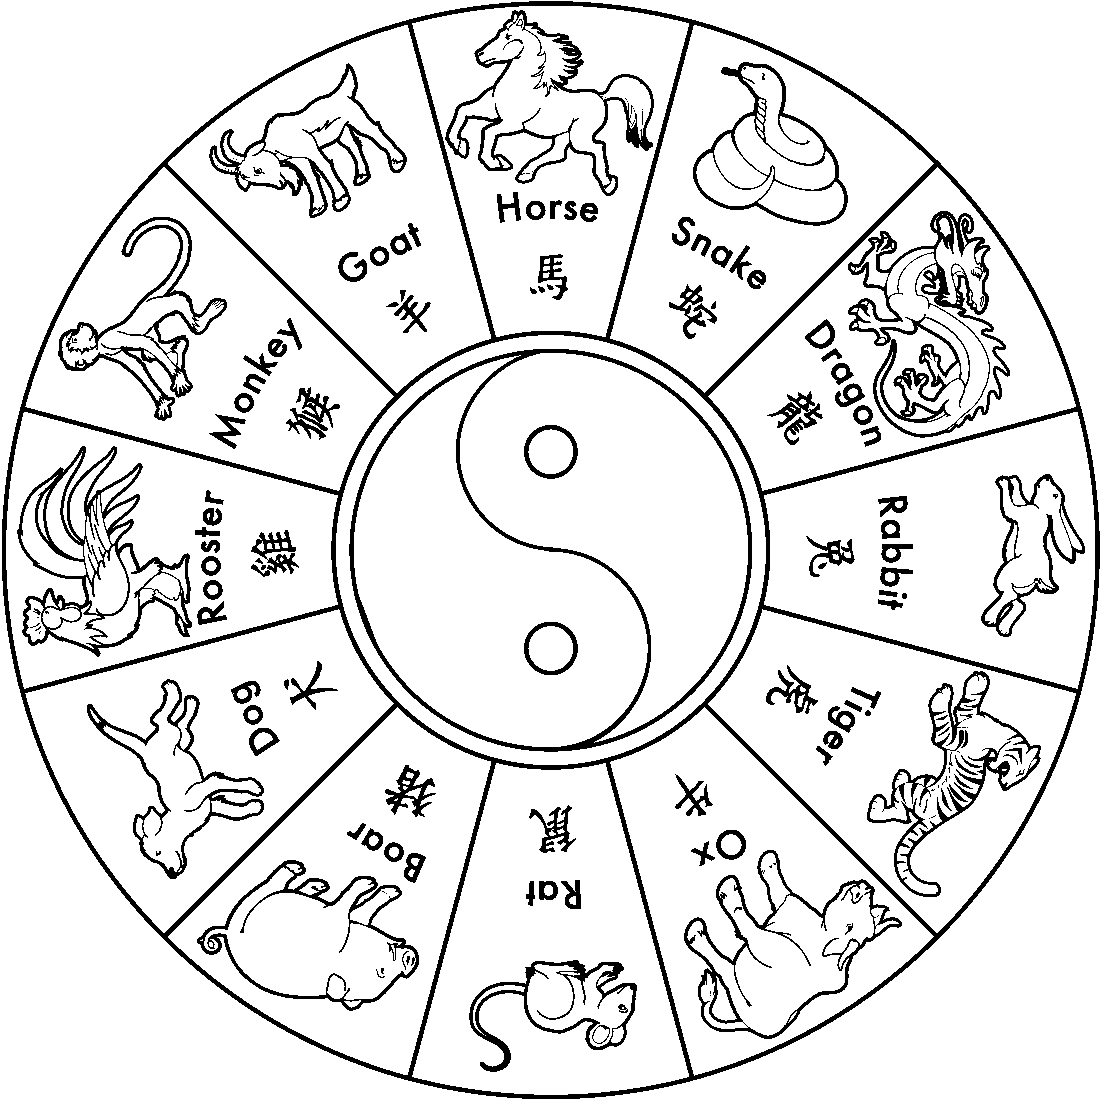 Chinese Zodiac Printable Chart